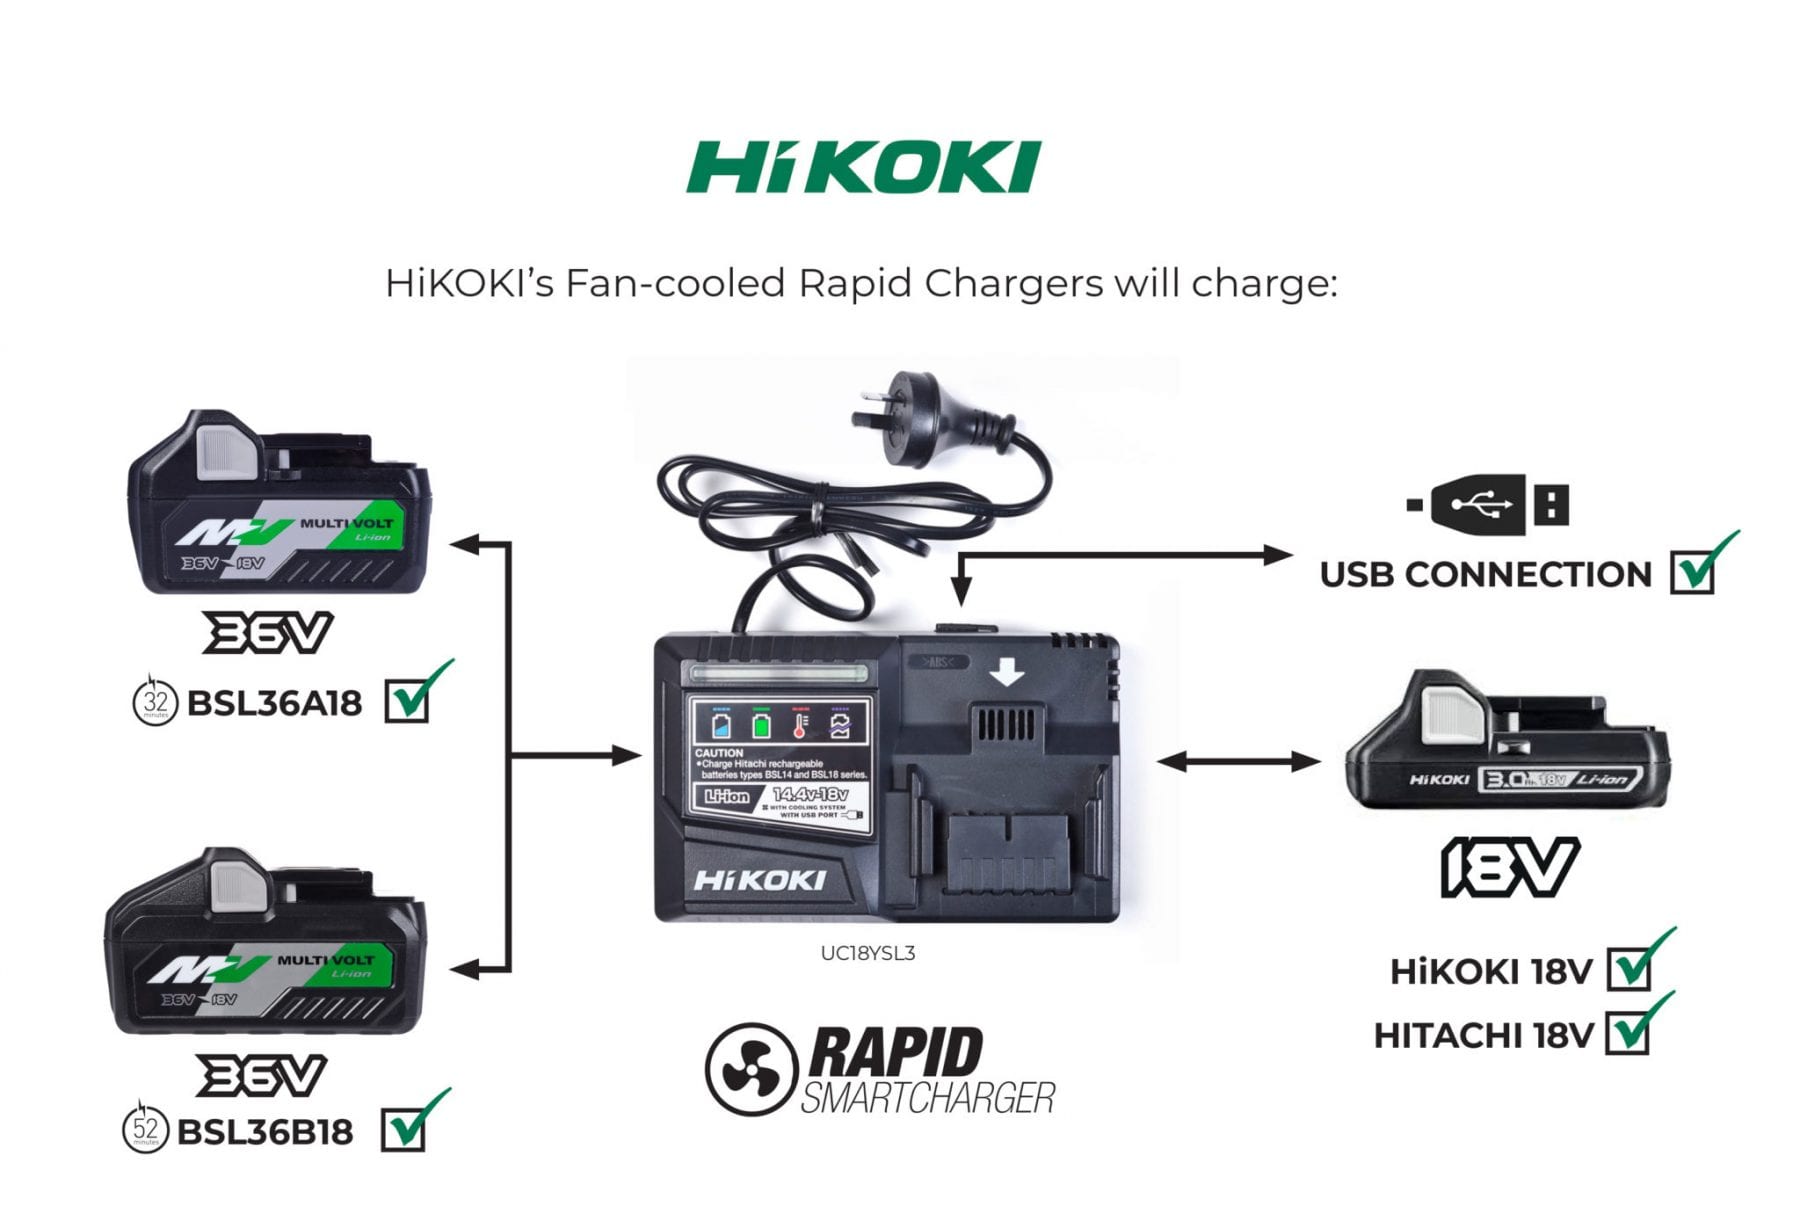 For Hikoki(Hitachi) 18V Battery Replacement